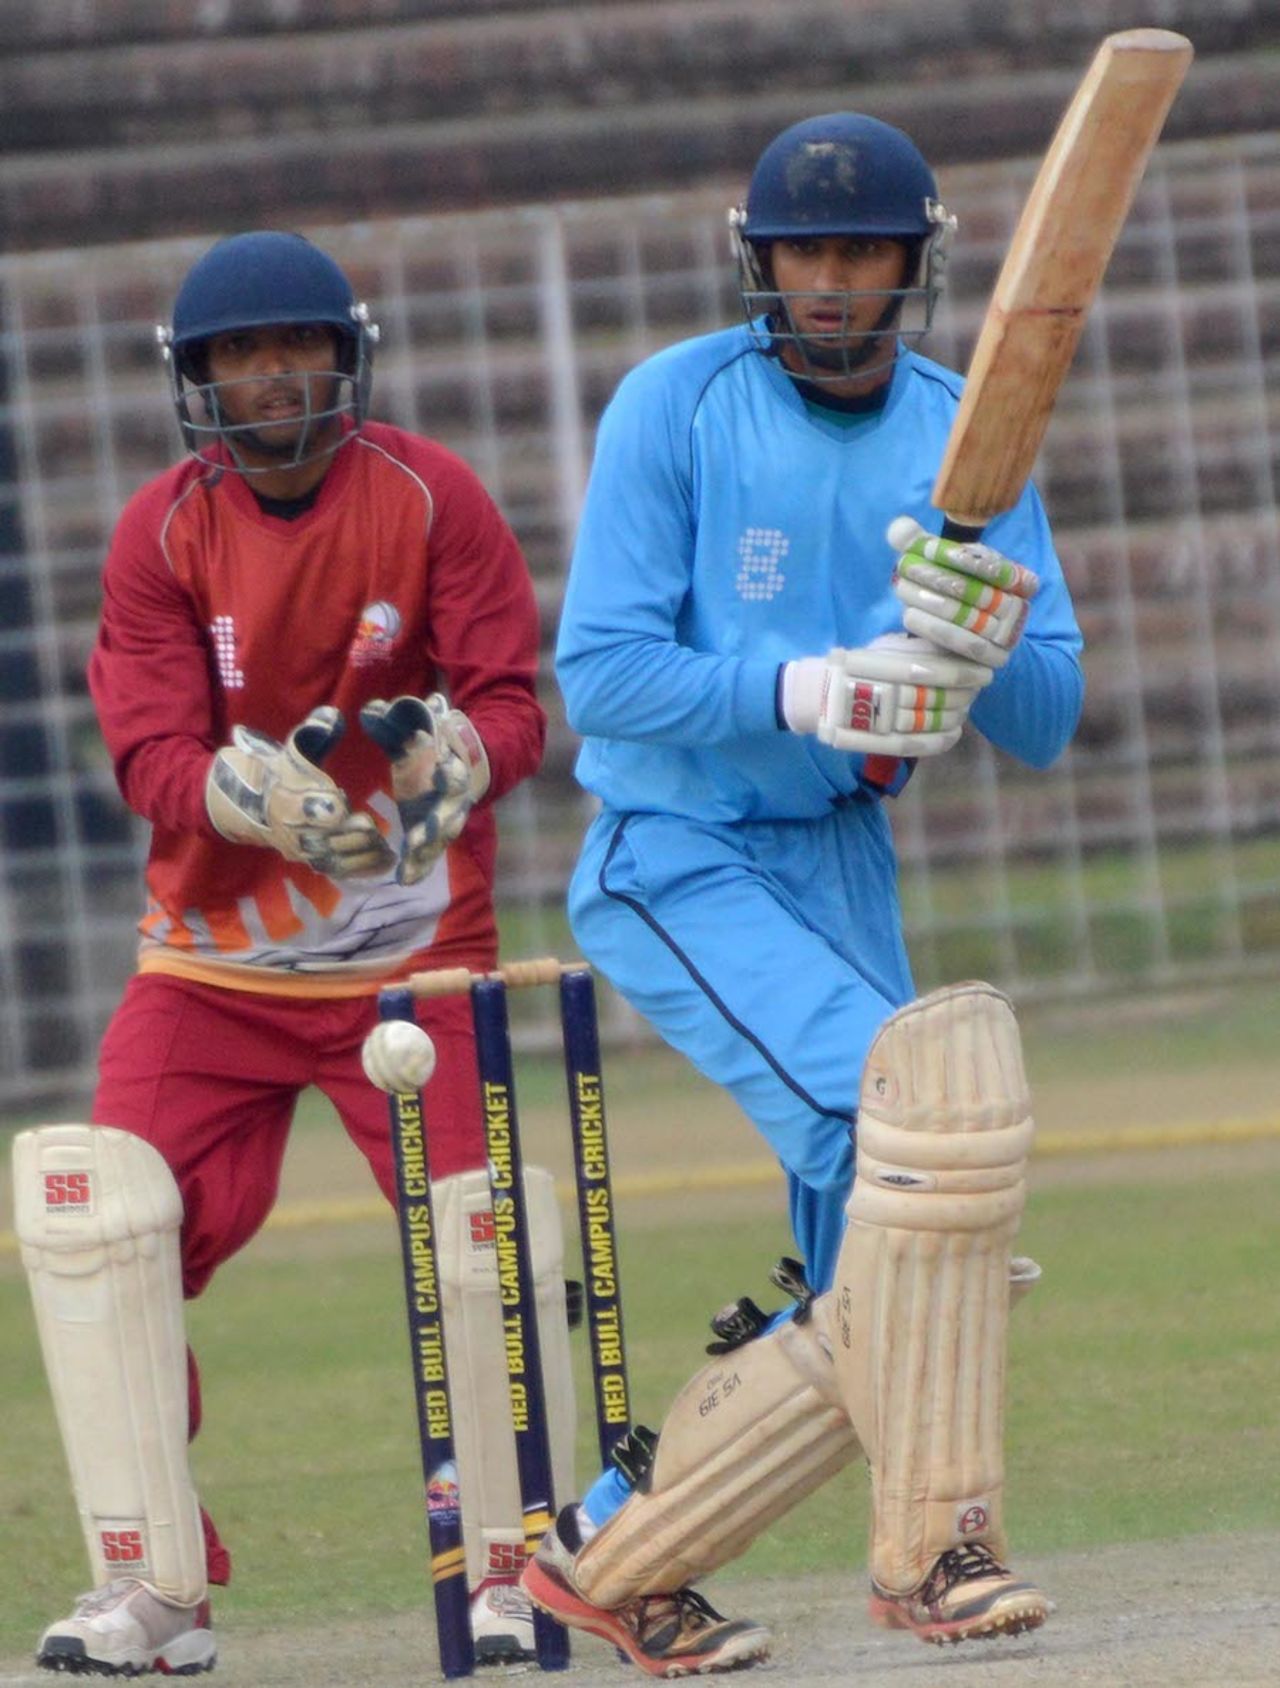 Rizvi College's Kevin Almeida flicks one to leg side, Rizvi College Mumbai v Marwari College Ranchi, Red Bull Campus Cricket 2014, Chandigarh, February 4, 2014